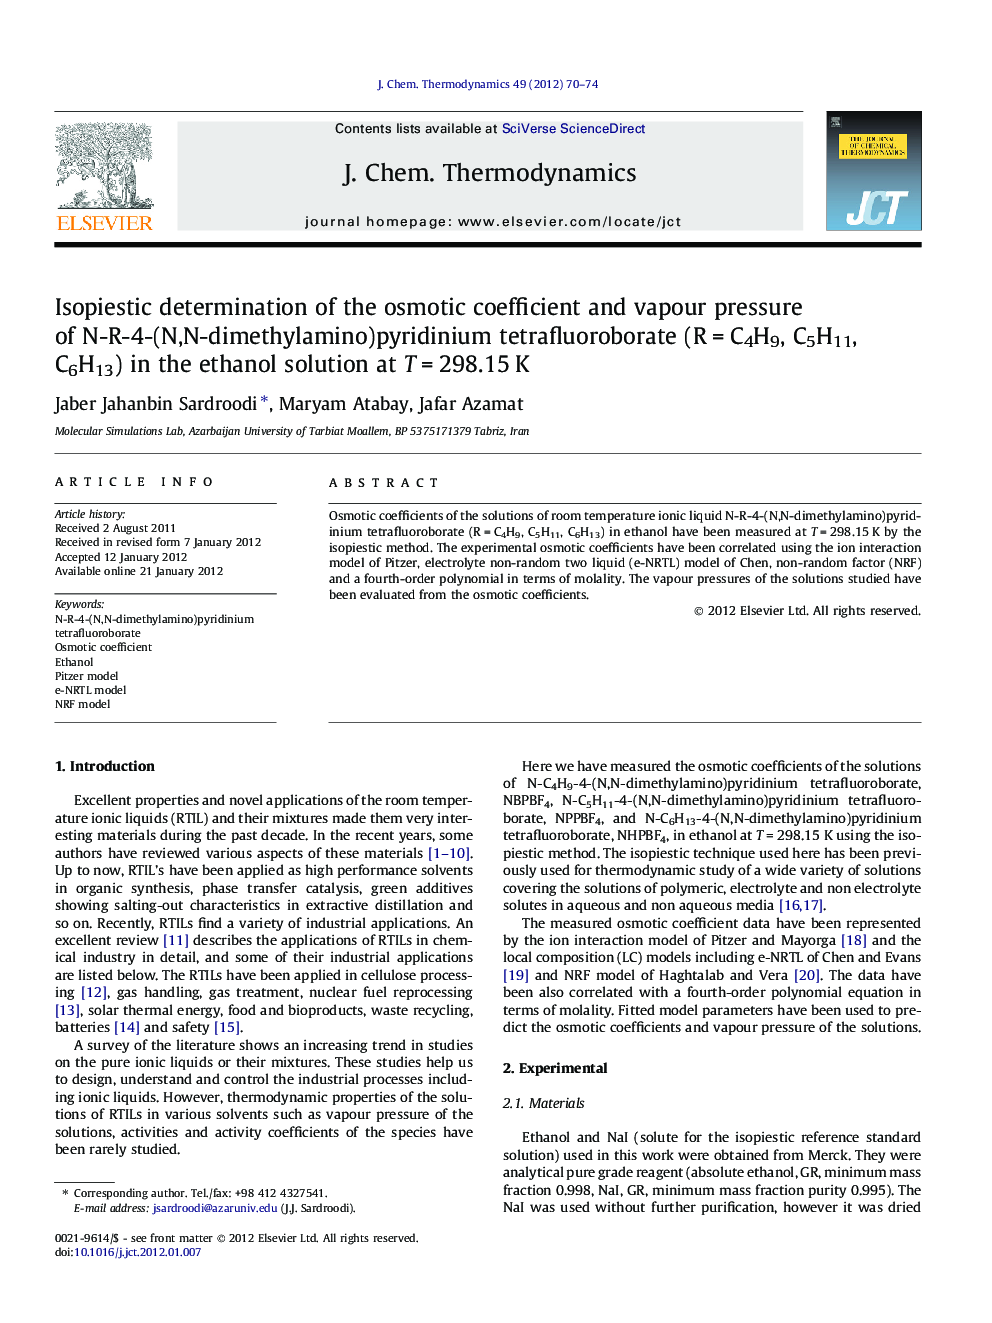 Isopiestic determination of the osmotic coefficient and vapour pressure of N-R-4-(N,N-dimethylamino)pyridinium tetrafluoroborate (R = C4H9, C5H11, C6H13) in the ethanol solution at T = 298.15 K